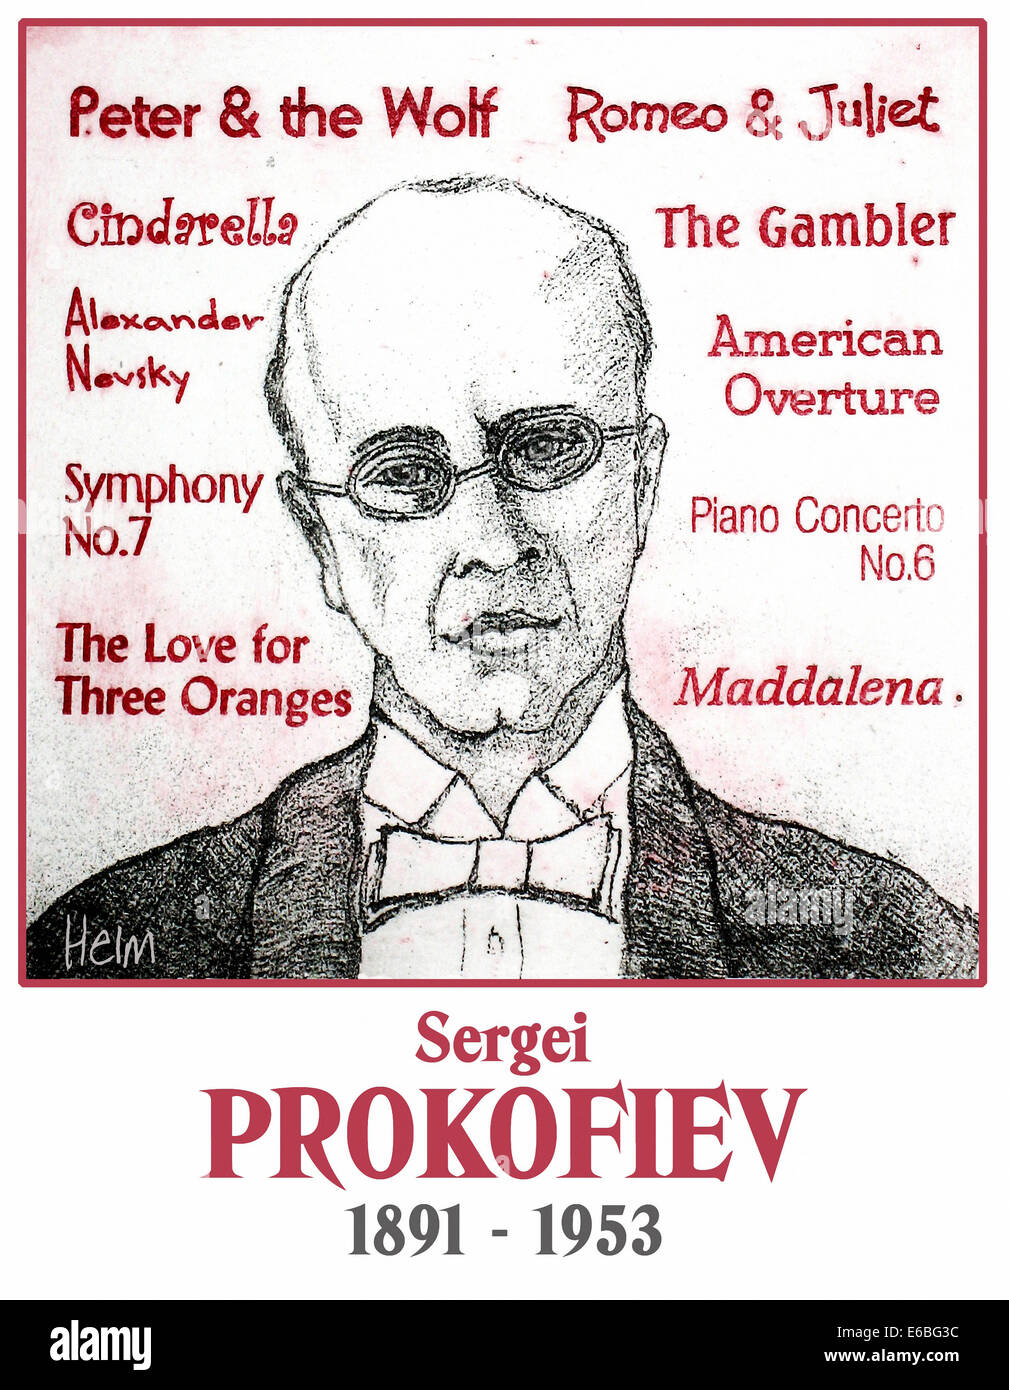 Prokofiev, Russian composer, 1891 - 1953 Stock Photo